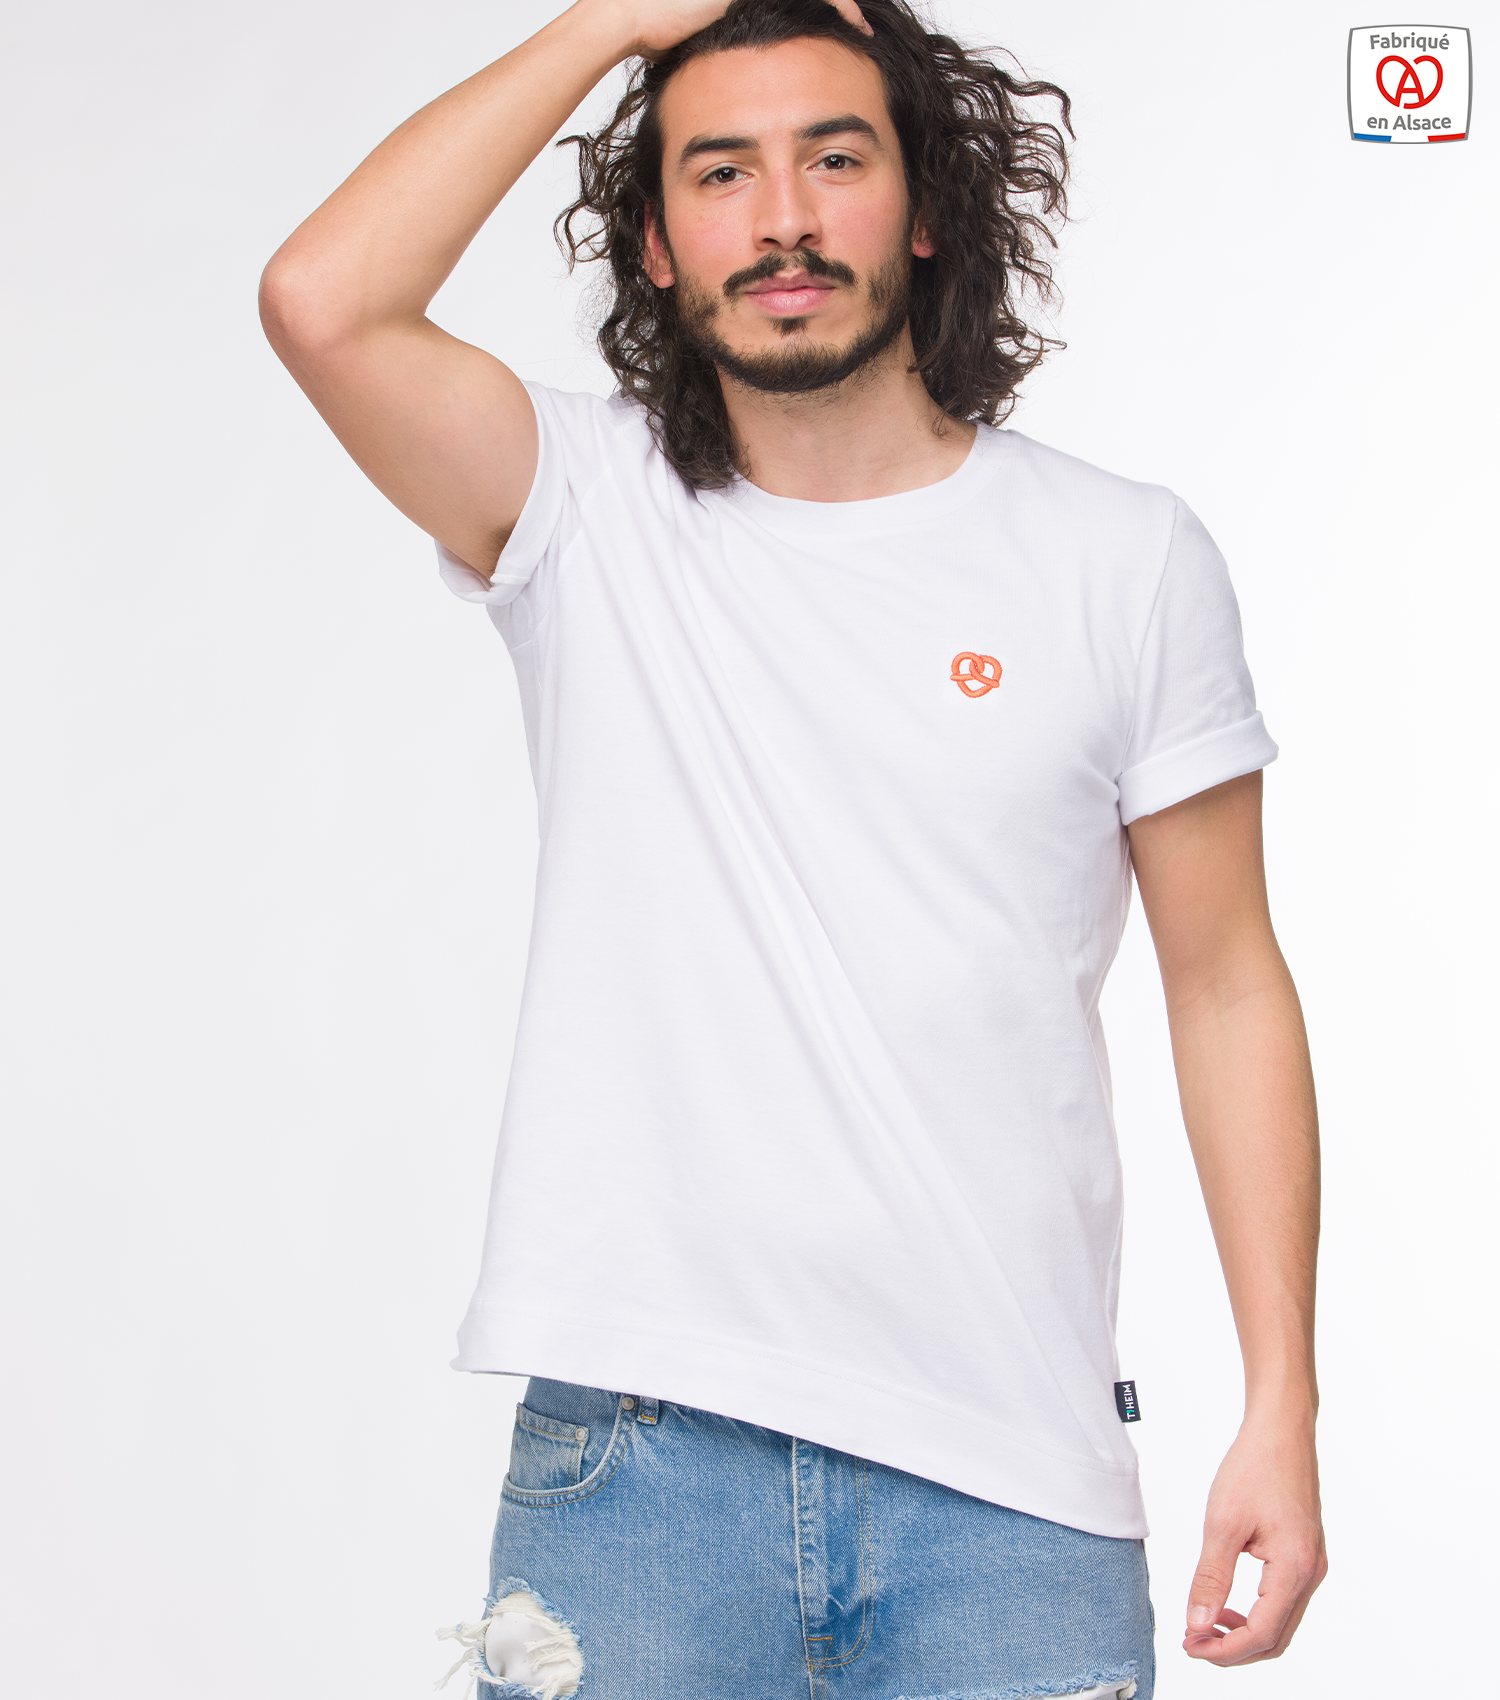 theim-t-shirt-made-in-france-mixte-blanc-bretzel-homme-1500-x-1700-px